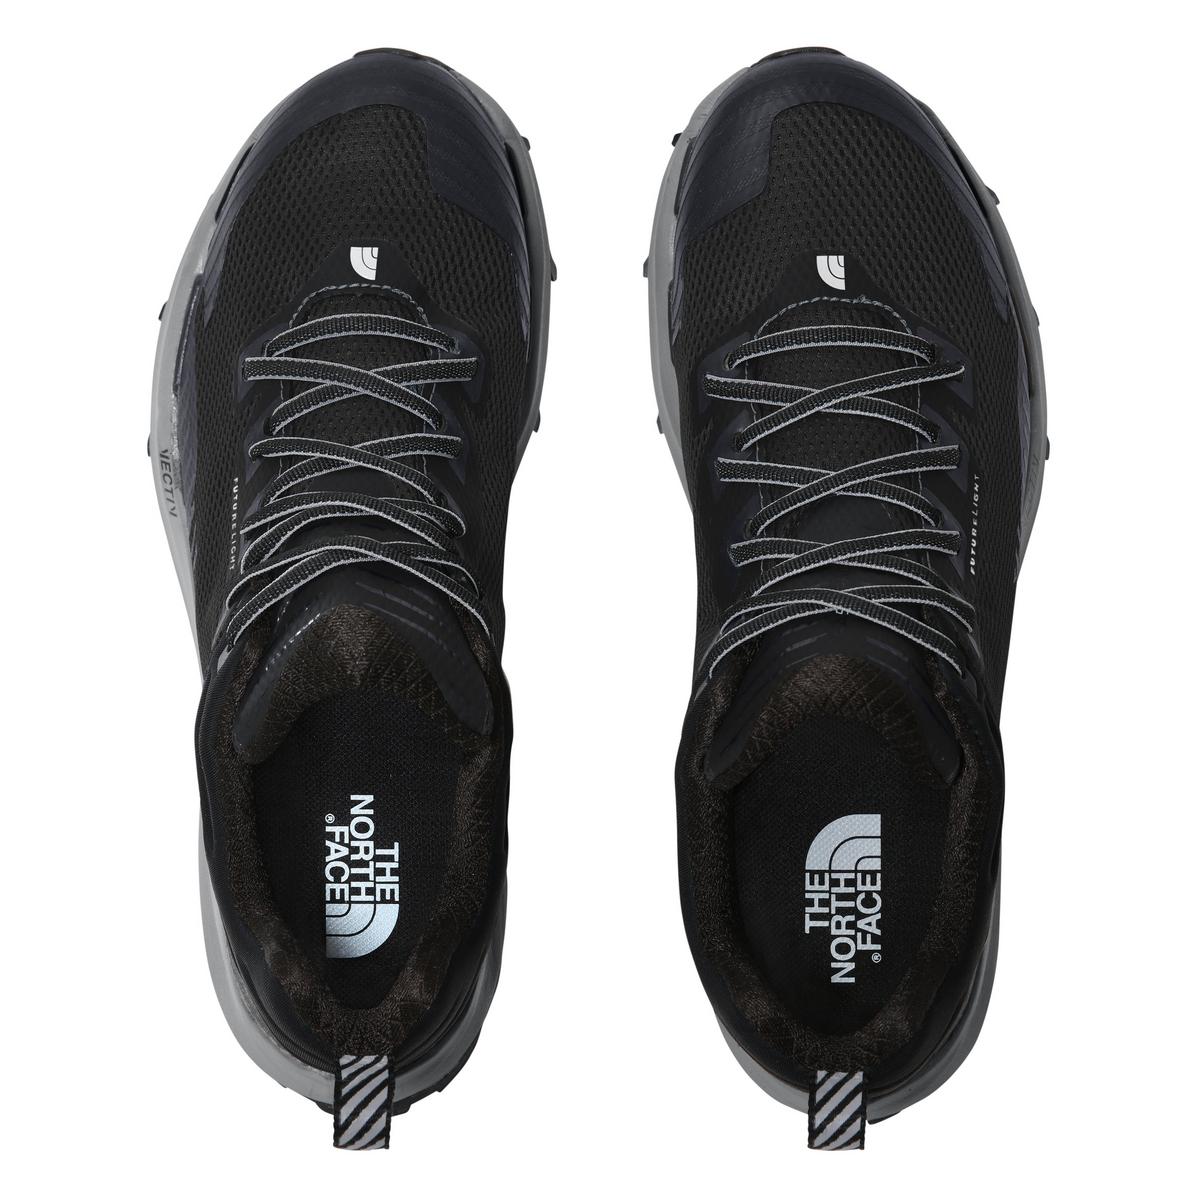 The North Face Men's Vectiv Fastpack Futurelight Hiking Shoes - Black